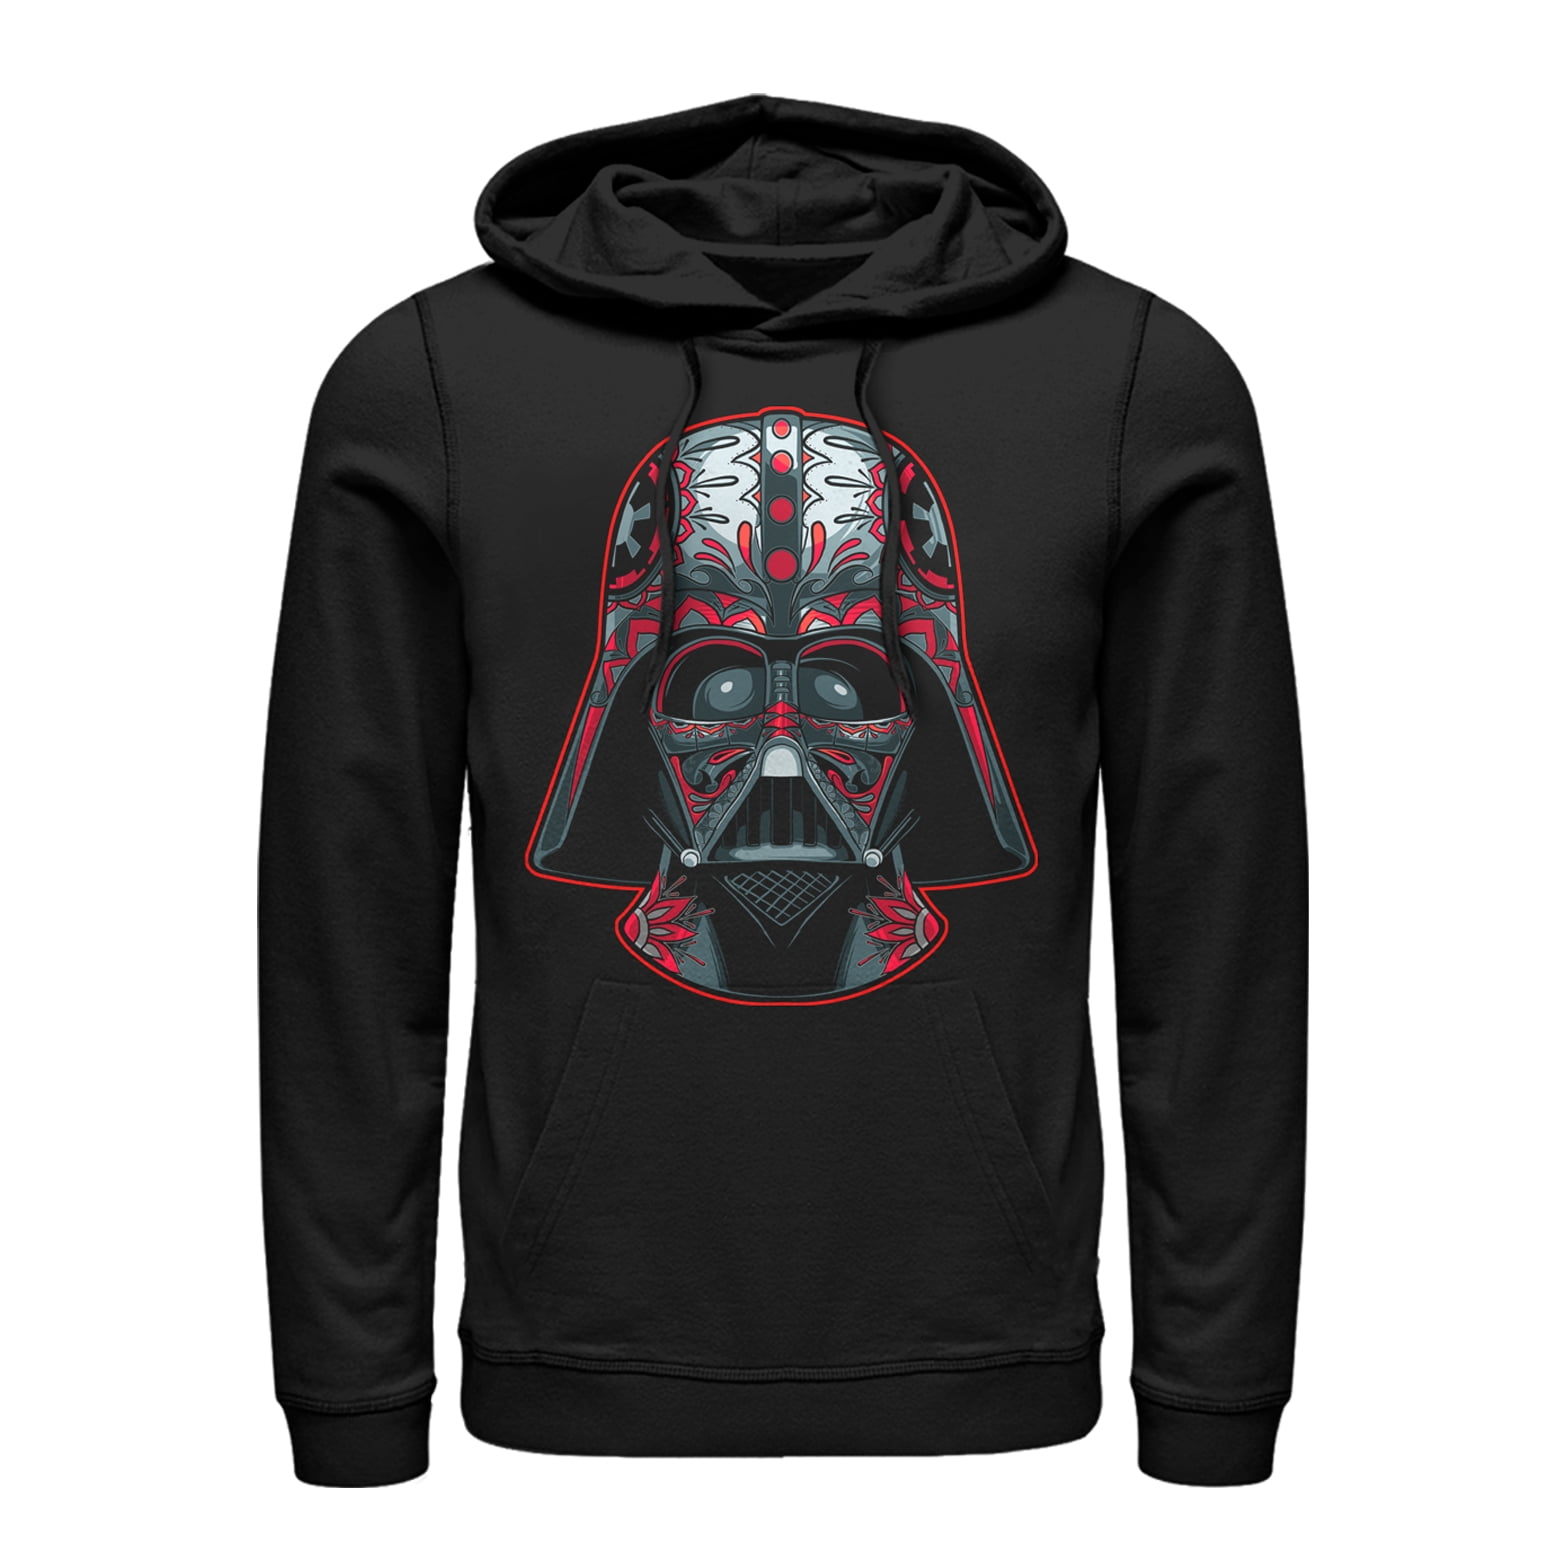 The Darth Face Hoodie Star Wars Darth Vader Parody Xmas Gift Men Sweatshirt Top 